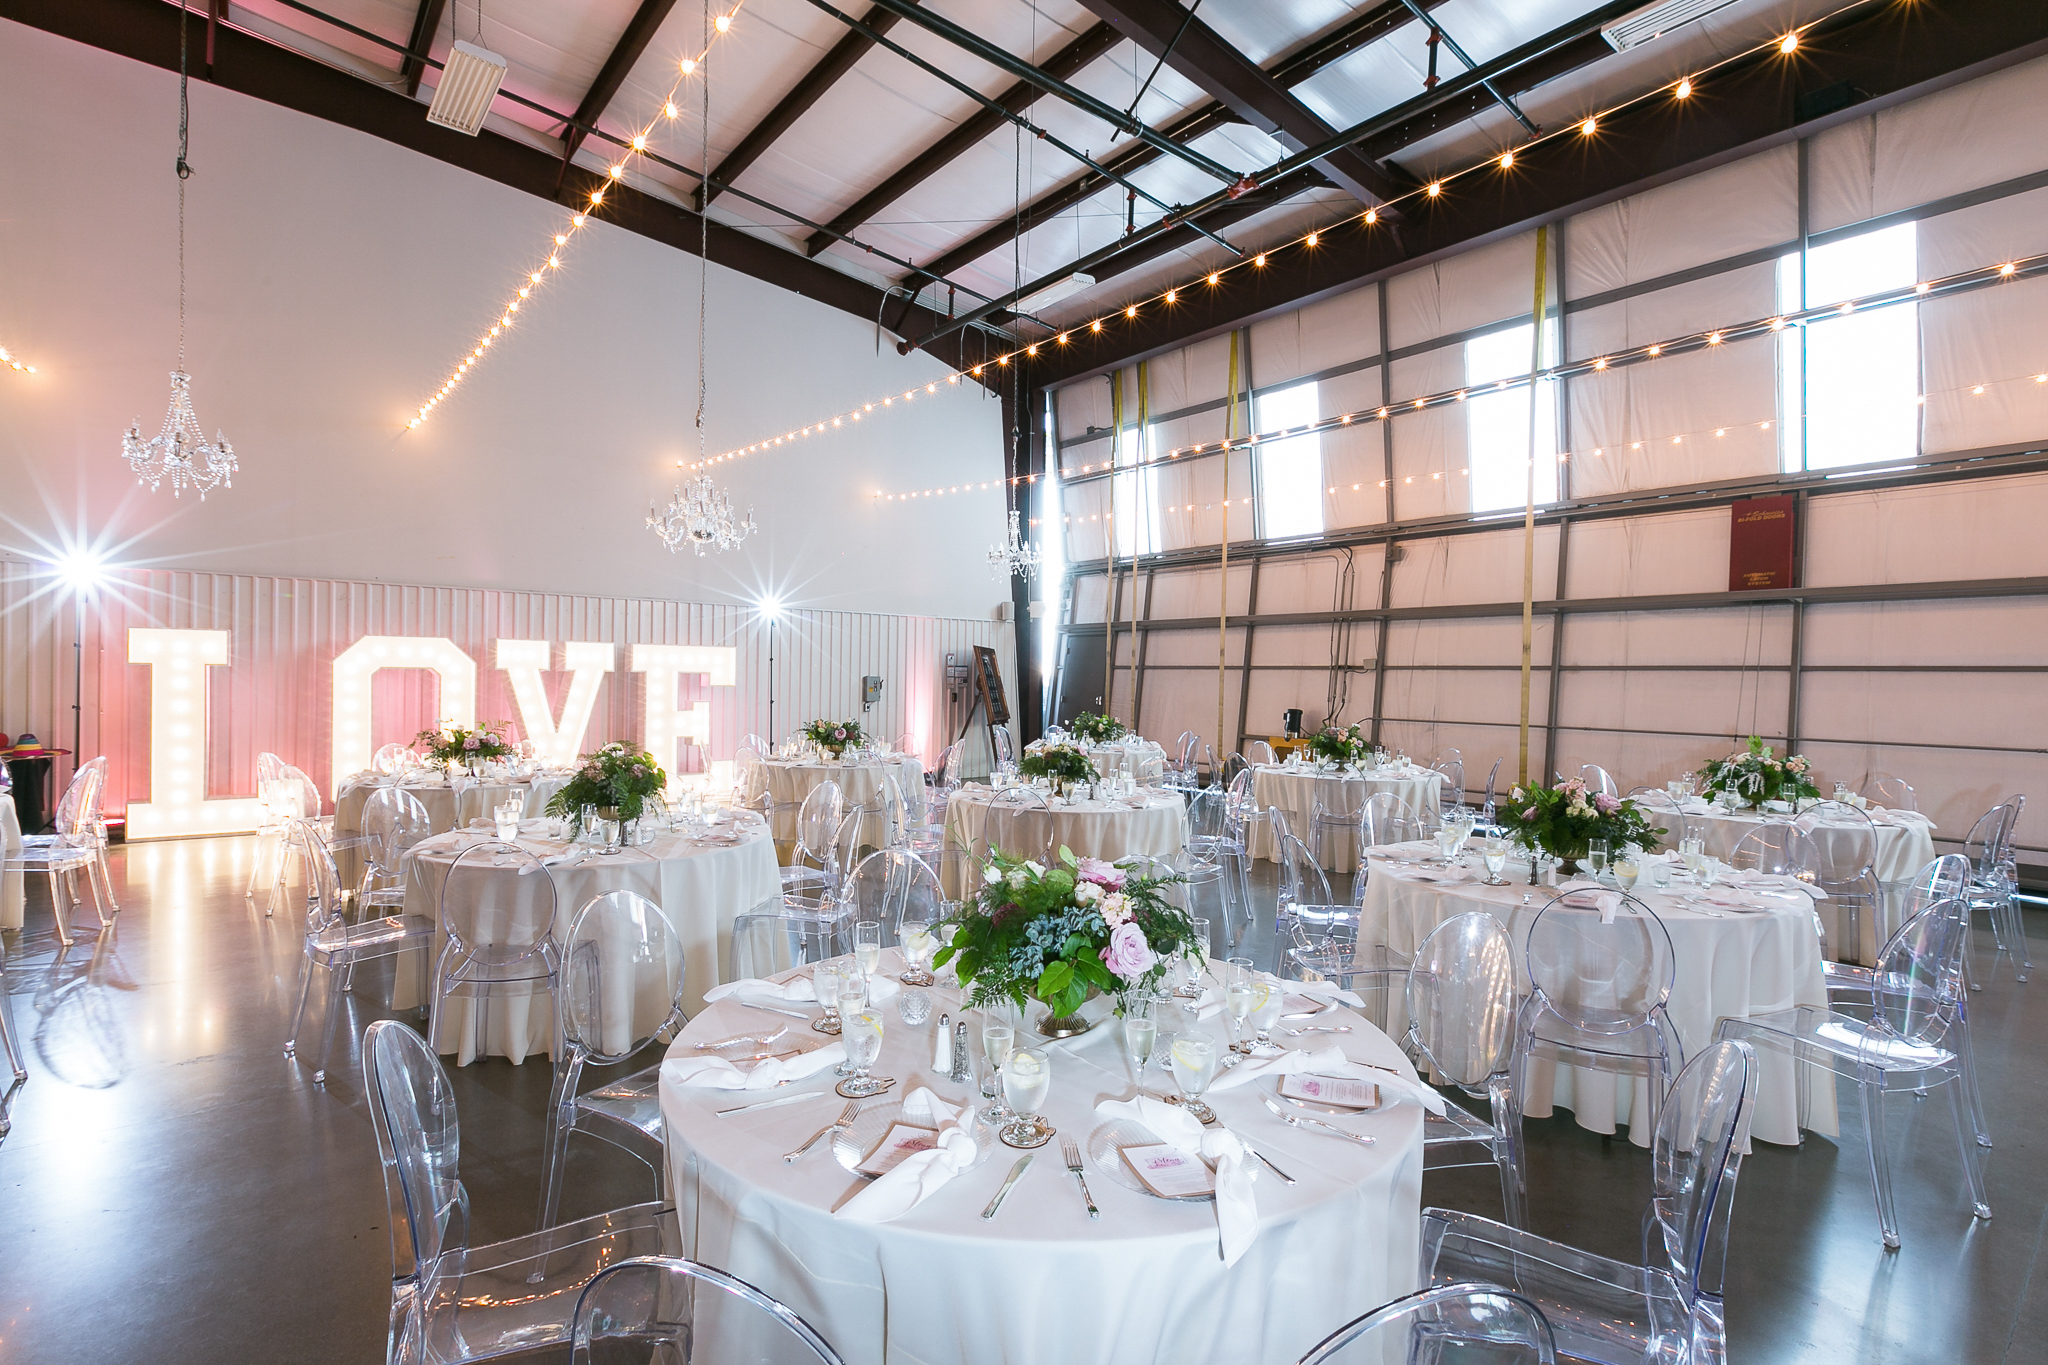 Hangar 21 wedding reception tables and decor